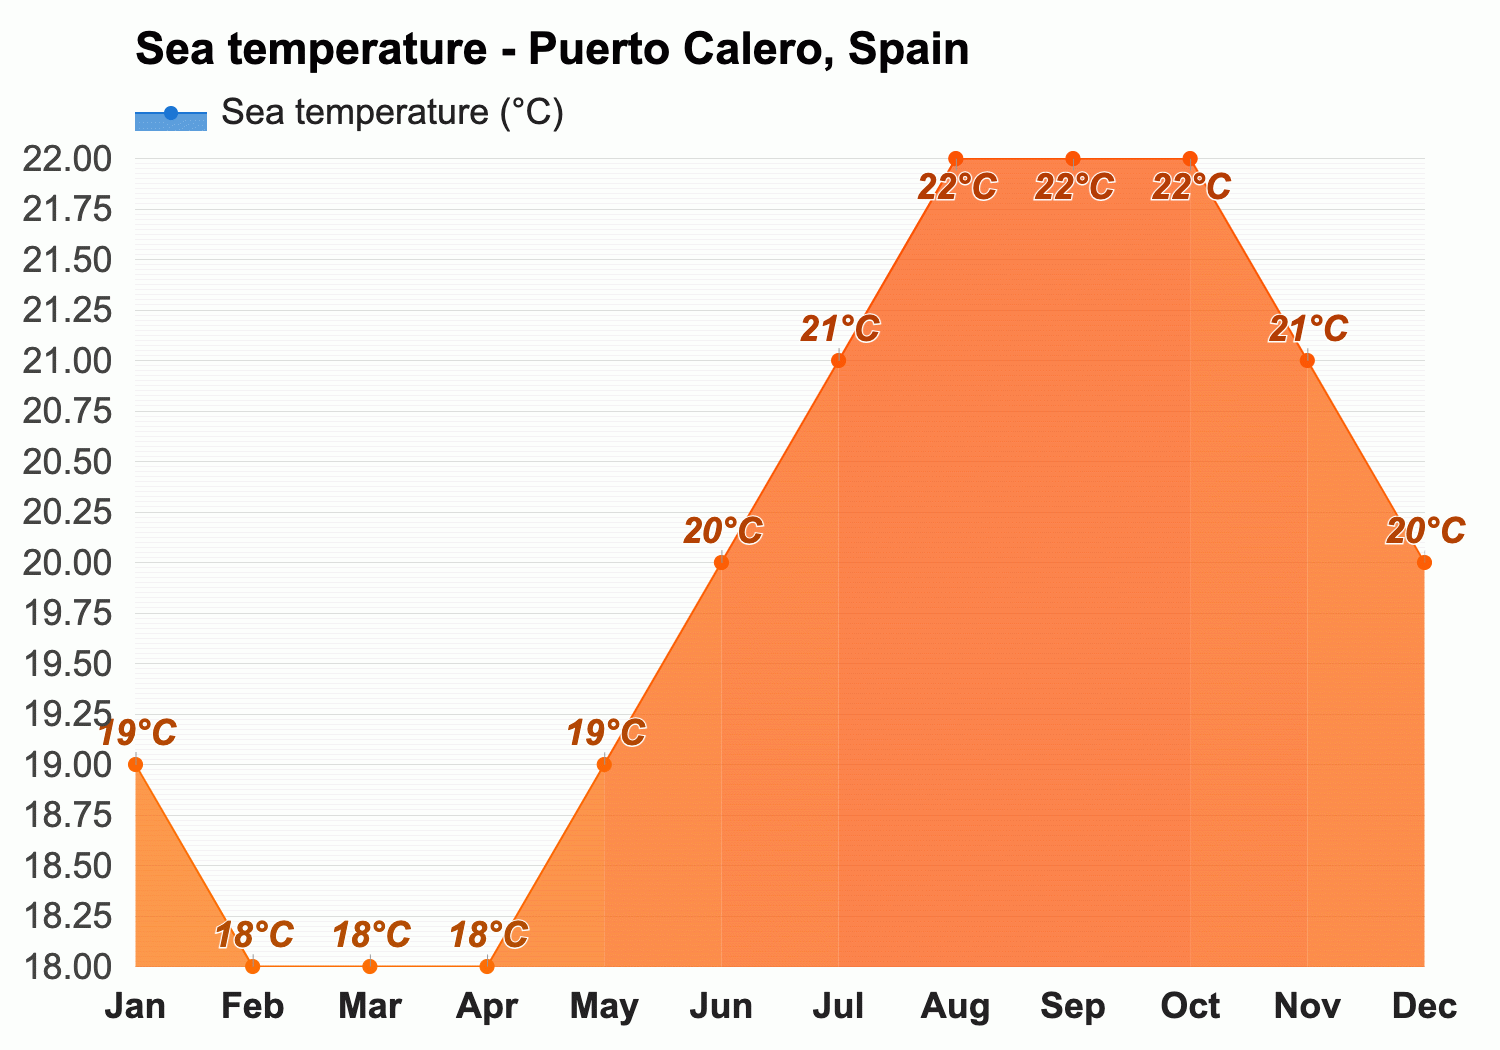 January Weather forecast - Winter forecast - Puerto Calero, Spain